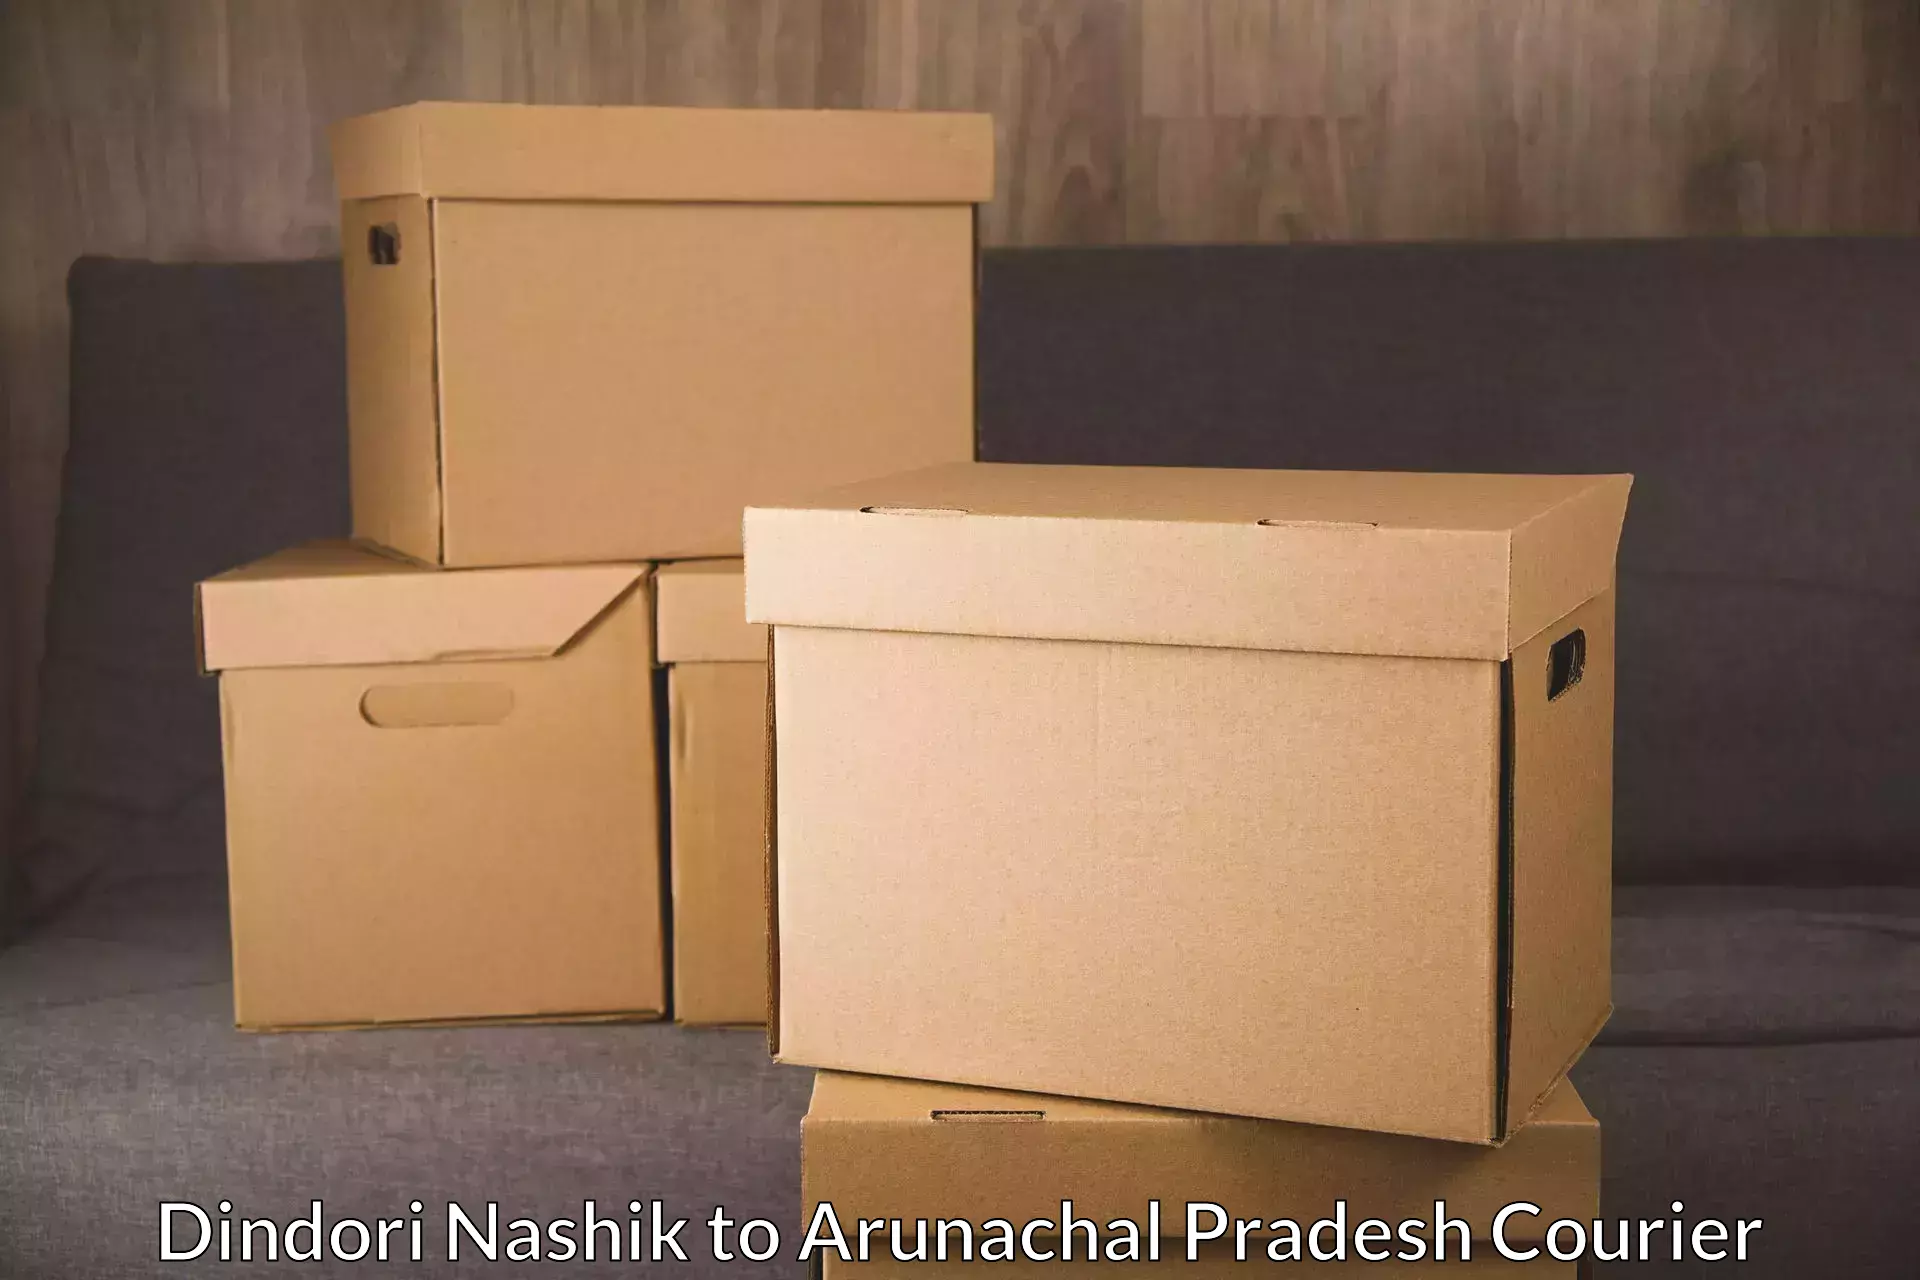 Round-the-clock parcel delivery Dindori Nashik to Lohit